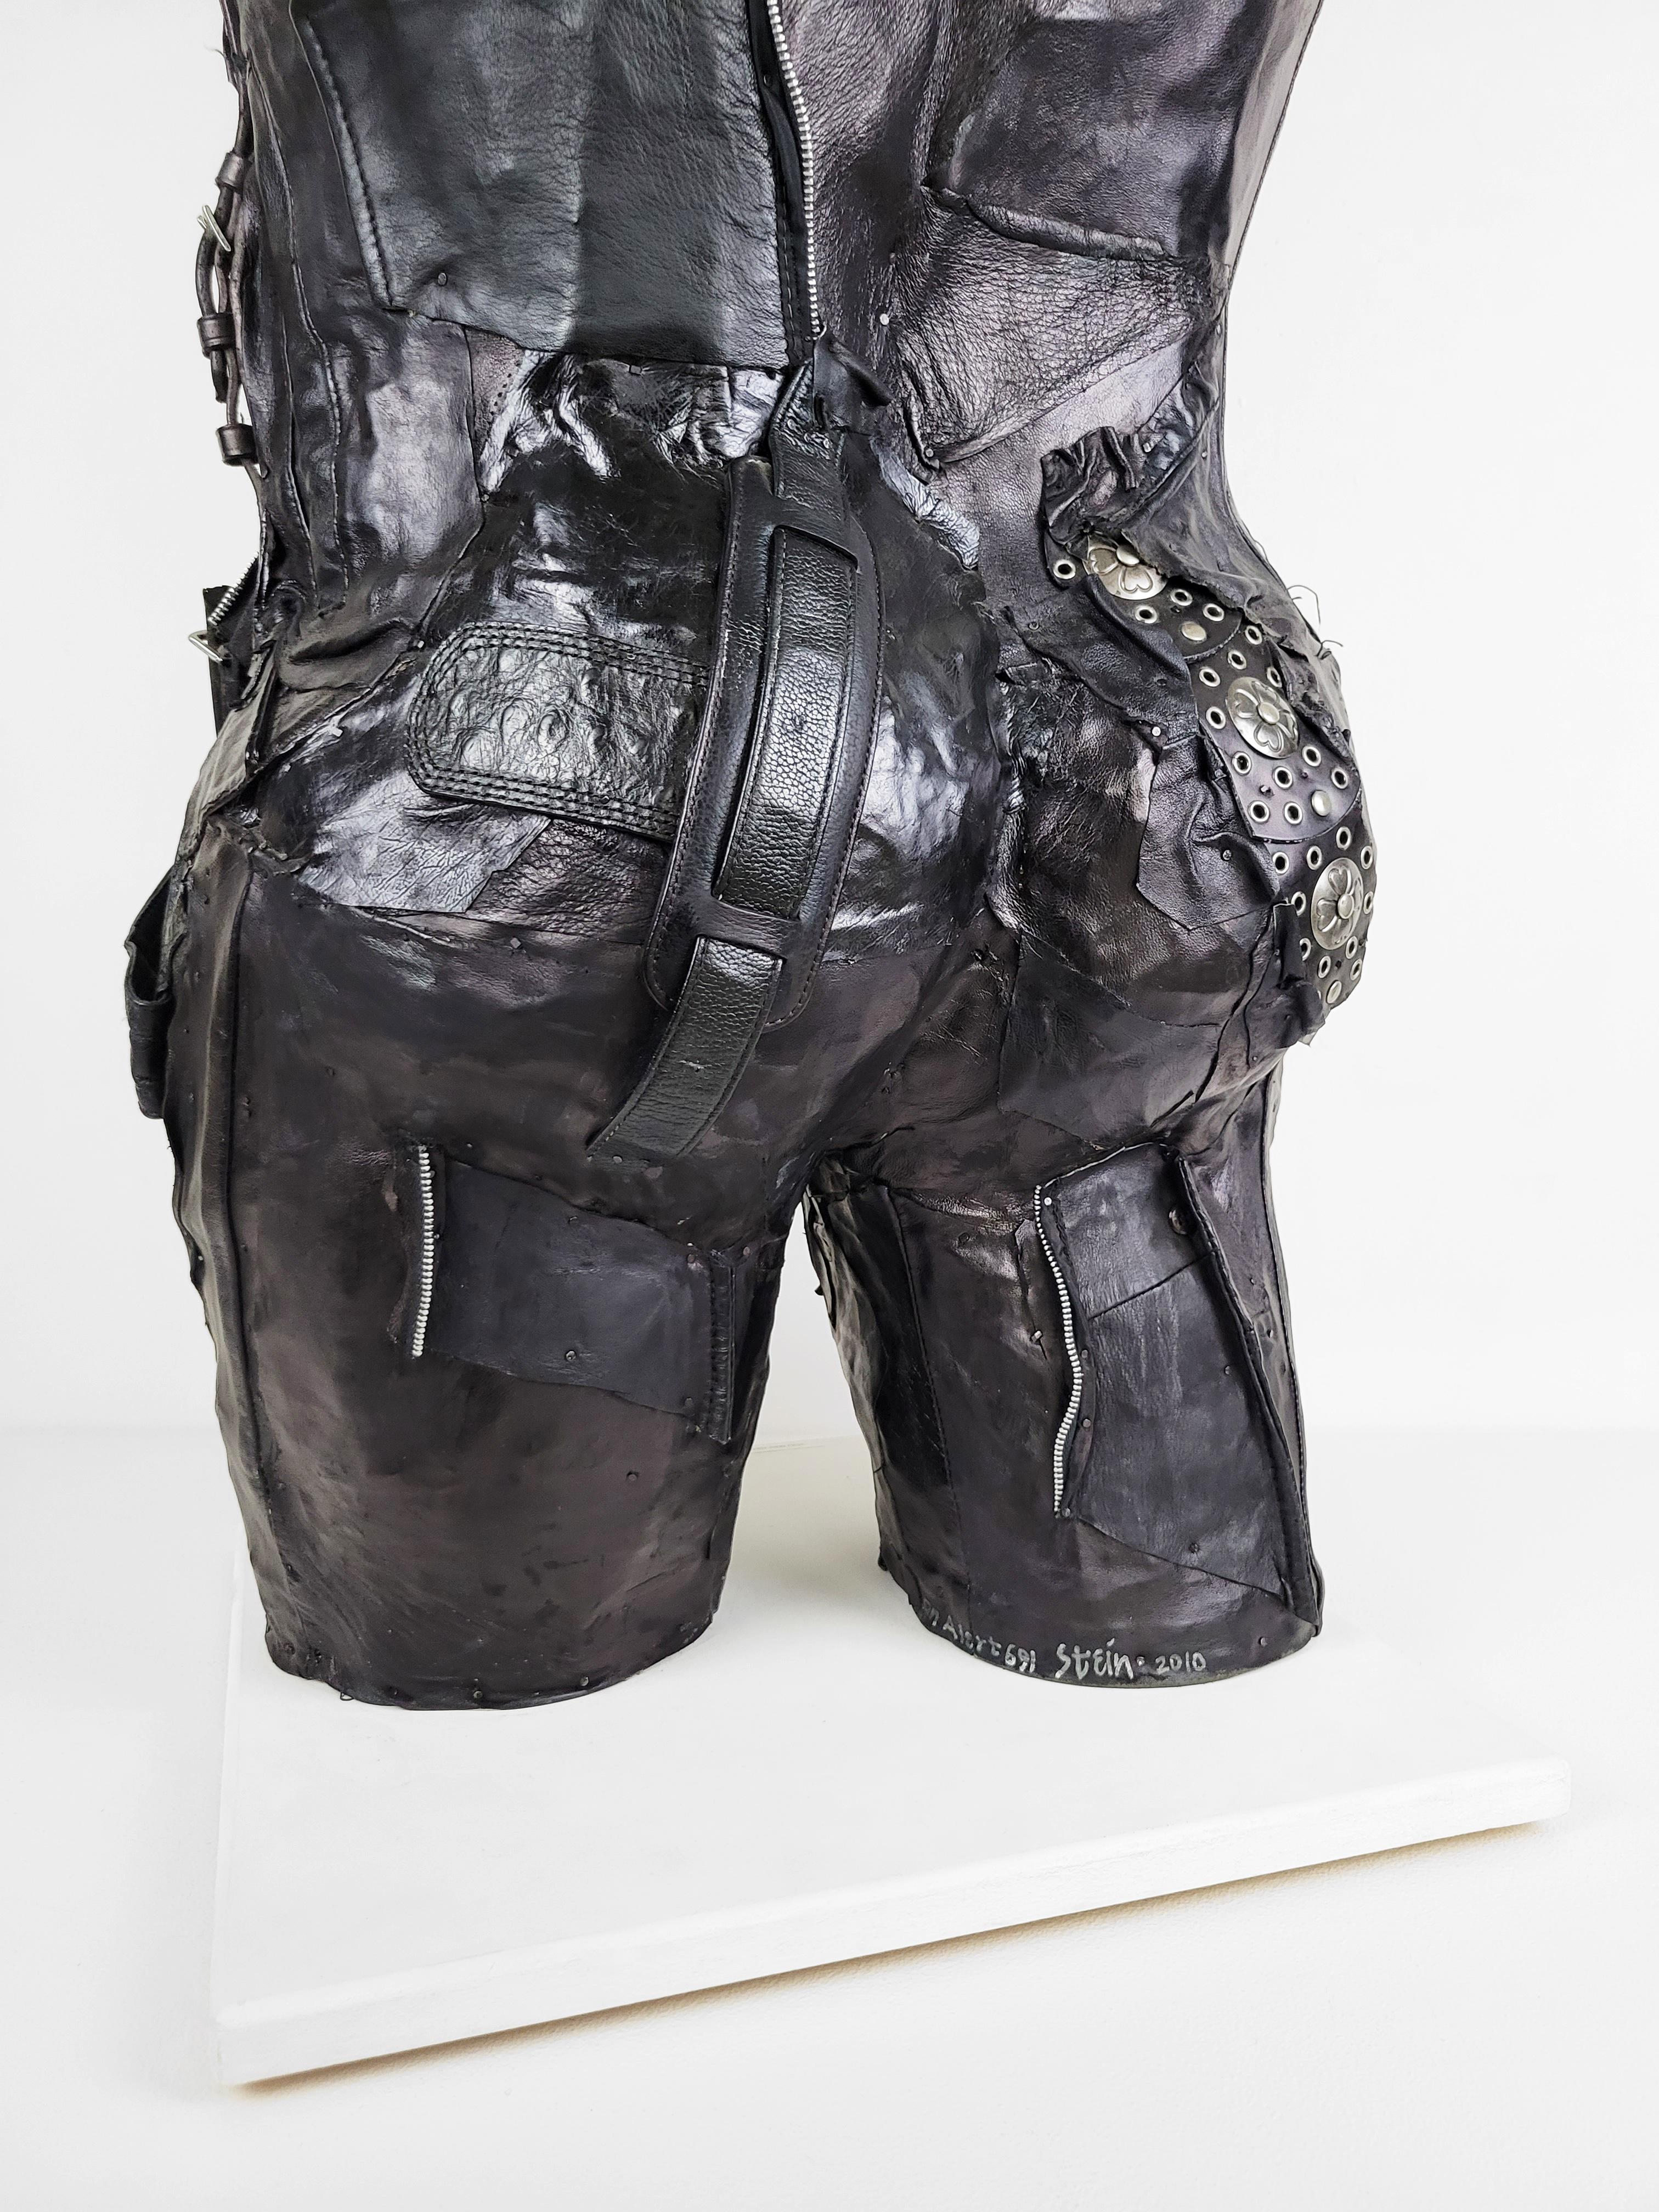 Feminist Contemporary Black/Silver Leather Metal Torso Sculpture - On Alert 691  For Sale 7